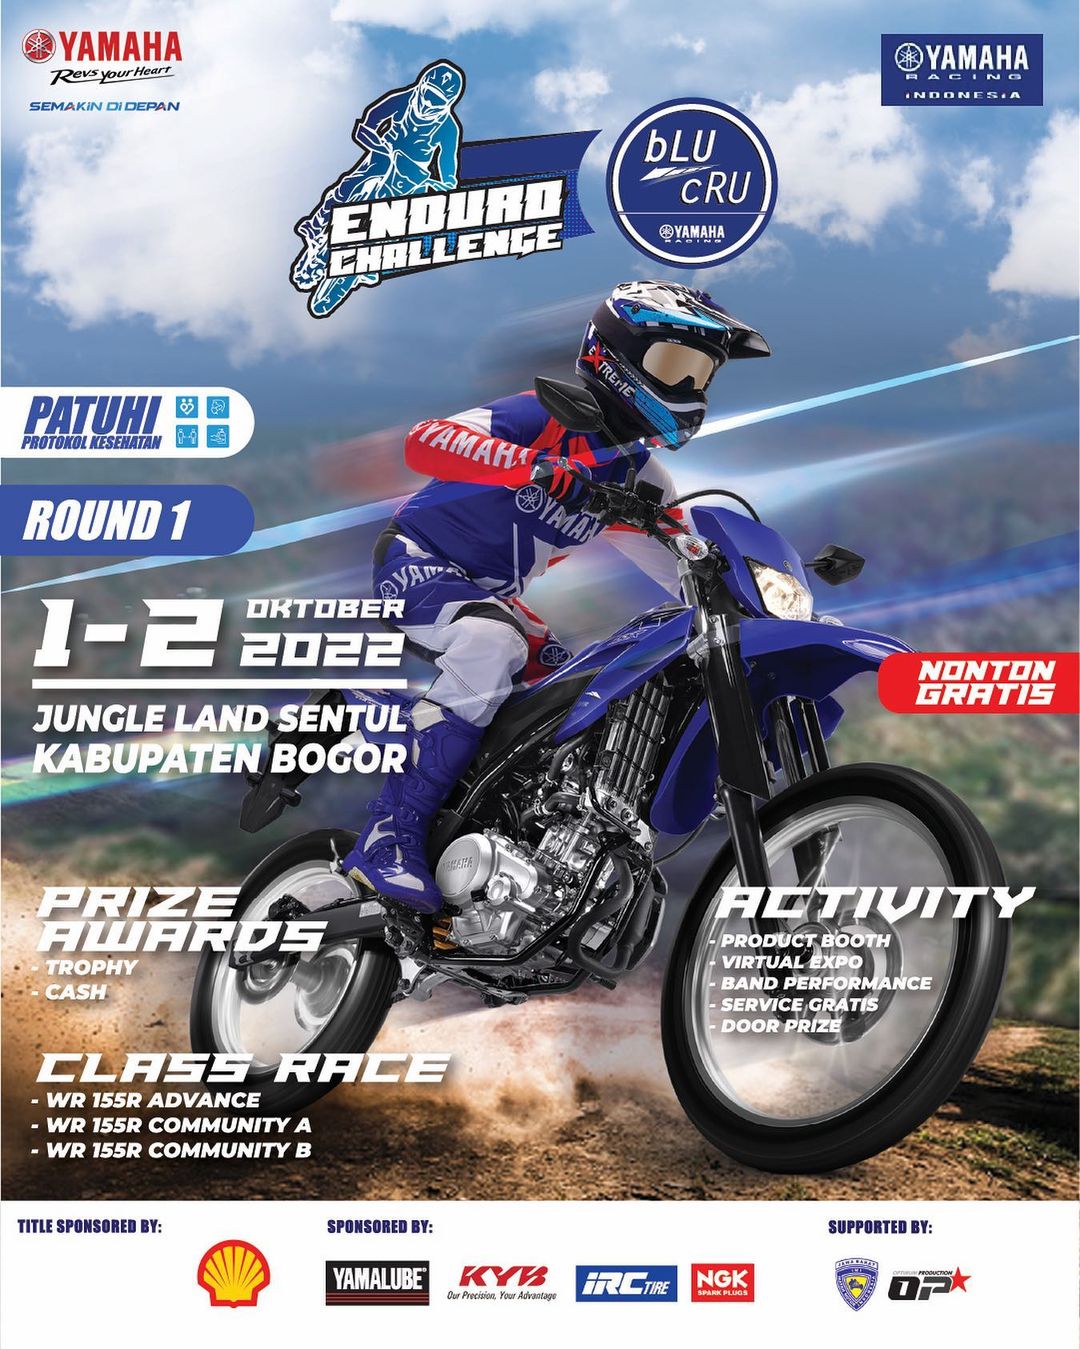 Yamaha Gelar Kompetisi SHELL bLU cRU Yamaha Enduro Challenge, Ini Jadwal Lengkapnya